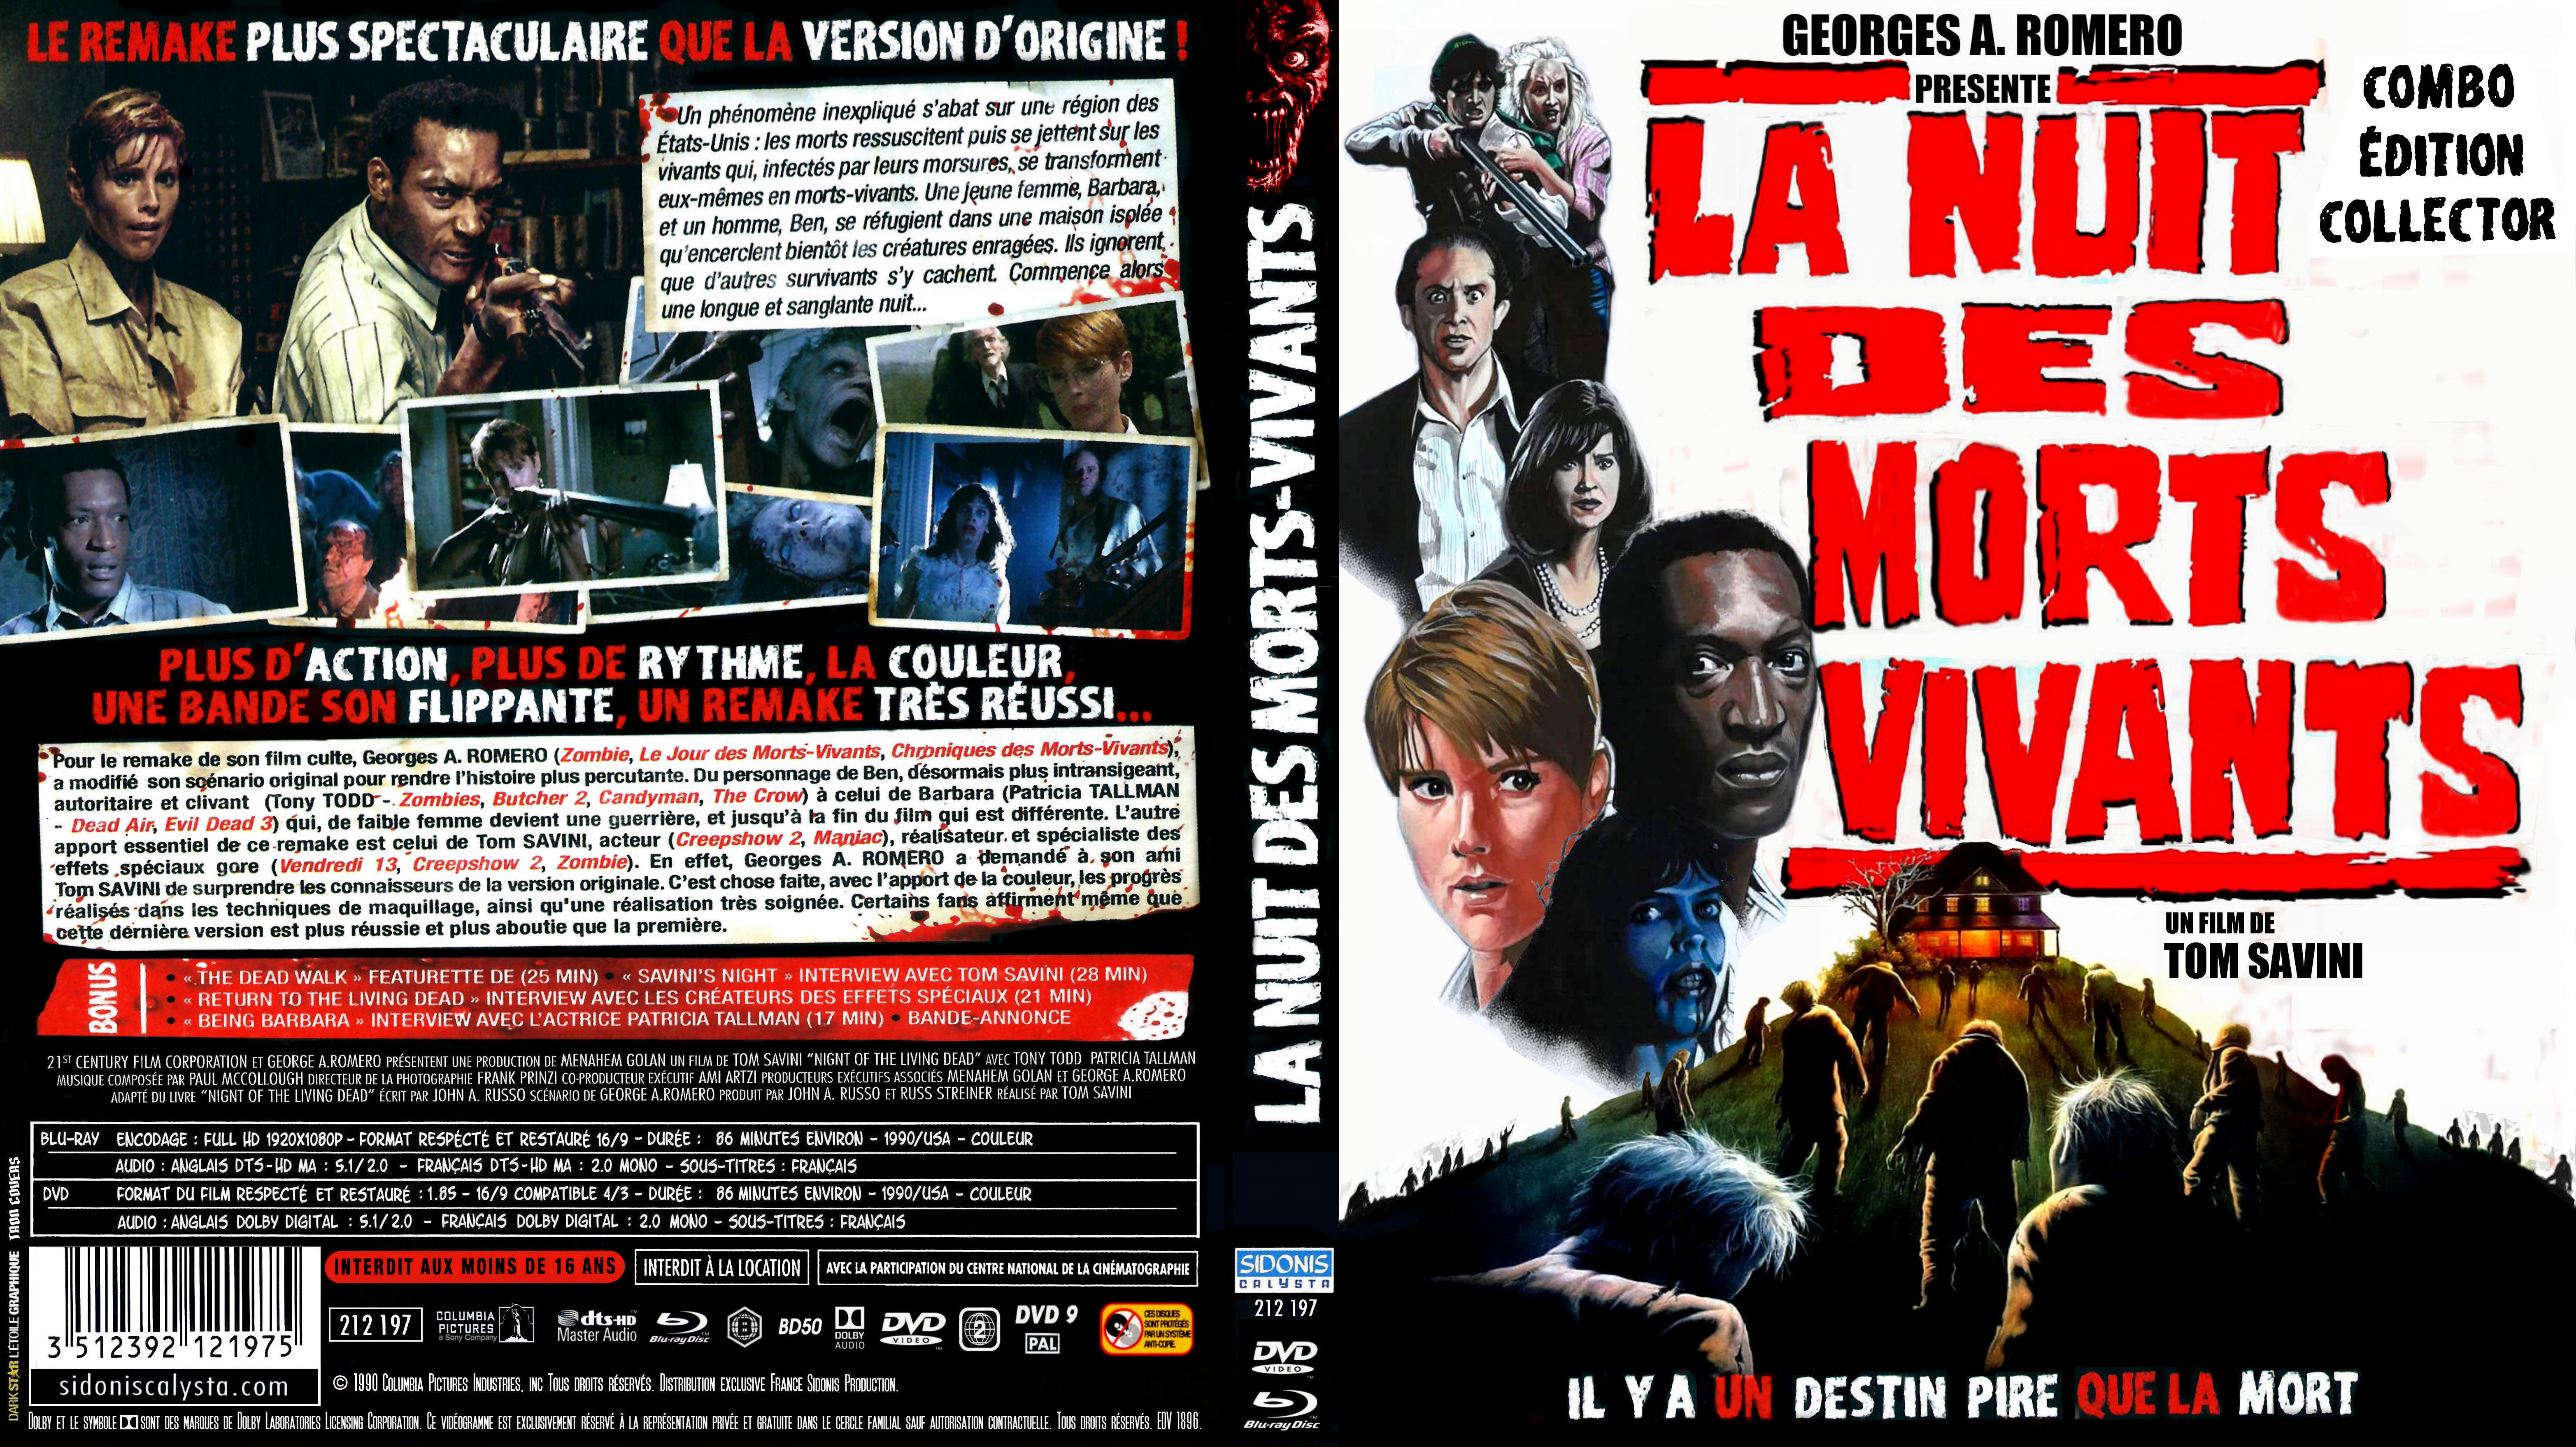 Jaquette DVD La nuit des morts vivants (1990) custom (BLU-RAY) v2